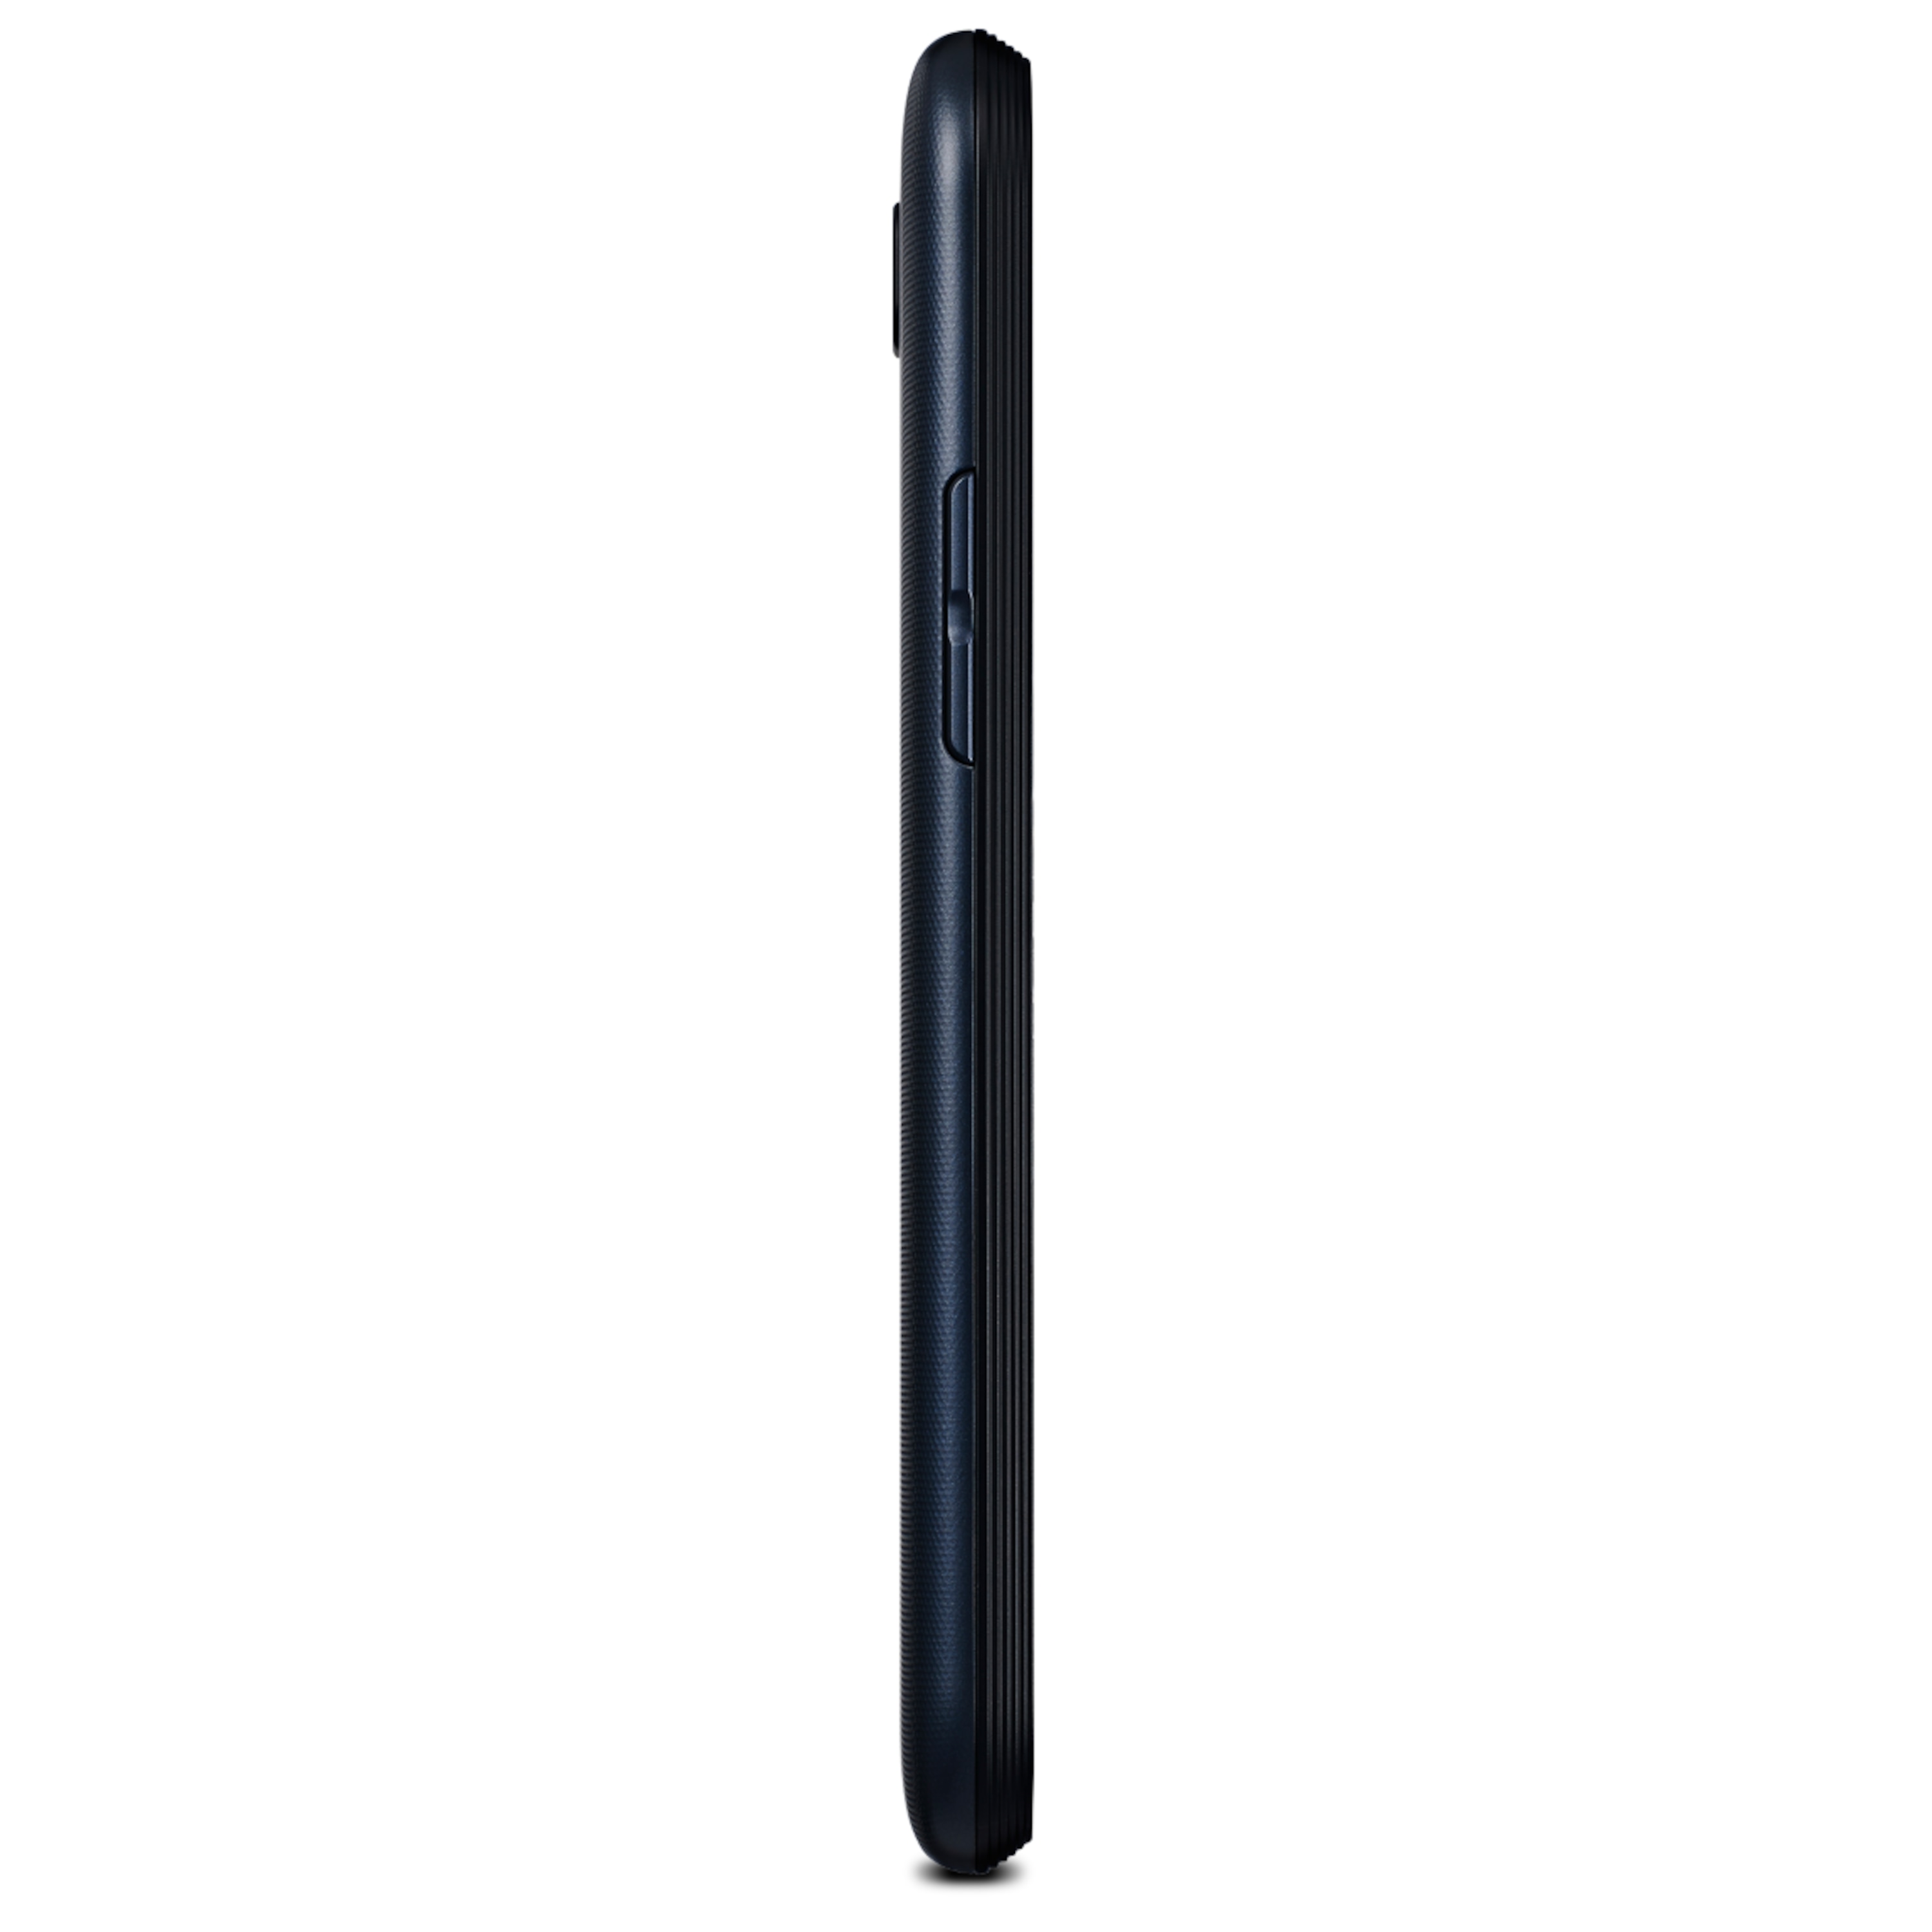 LG ELECTRONICS  K3 Smartphone, 11,43 cm (4,5") HD-Display, Android™ 6.0.1, 8 GB Speicher, Quad-Core-Prozessor